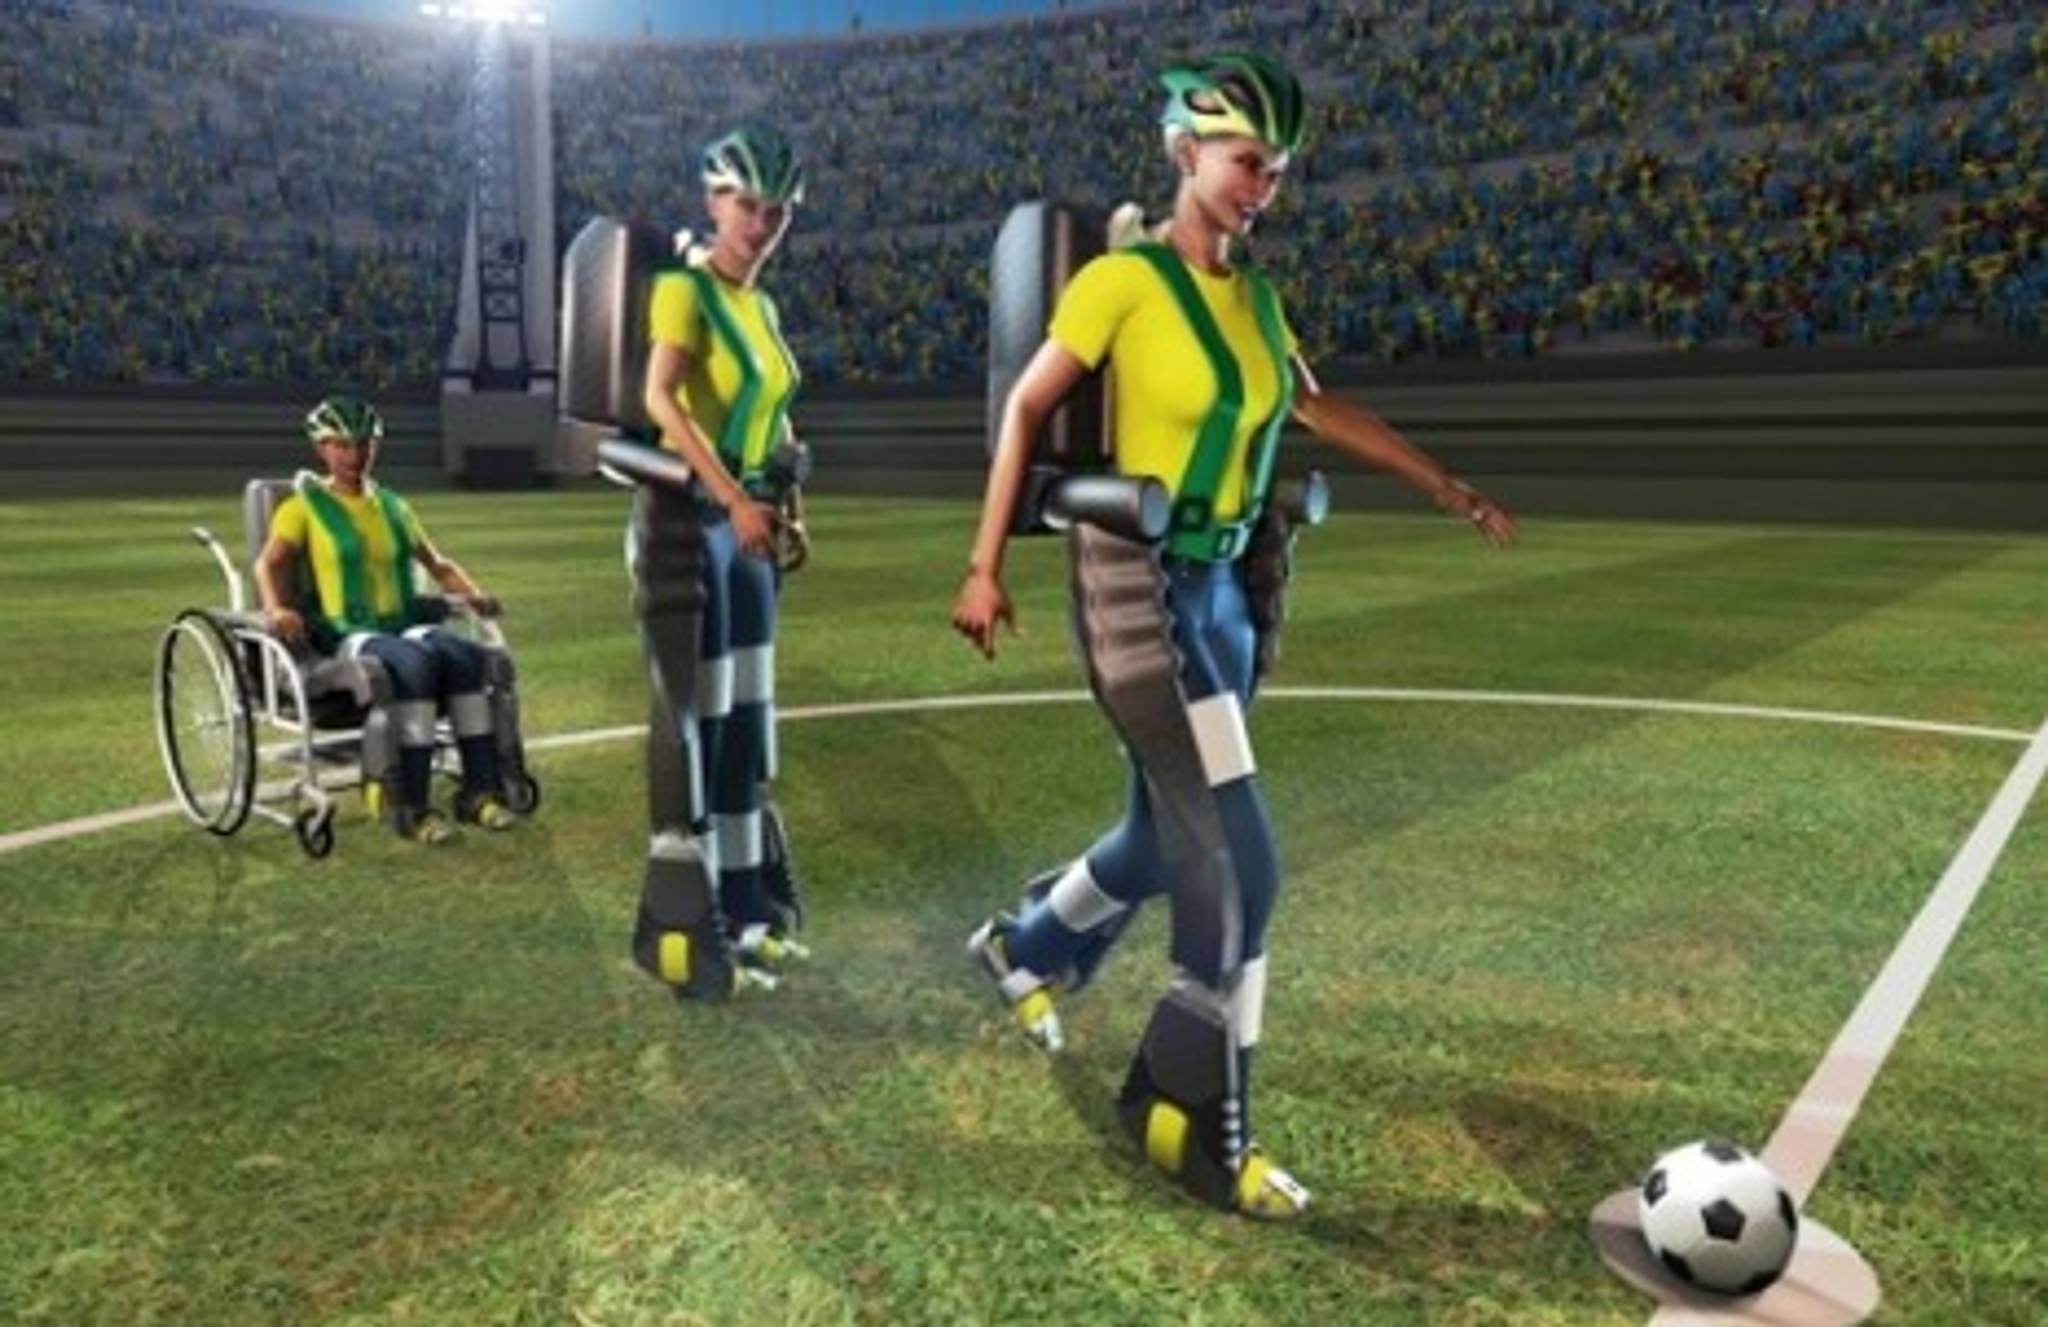 Brazil kicks off with a mind-reading robosuit